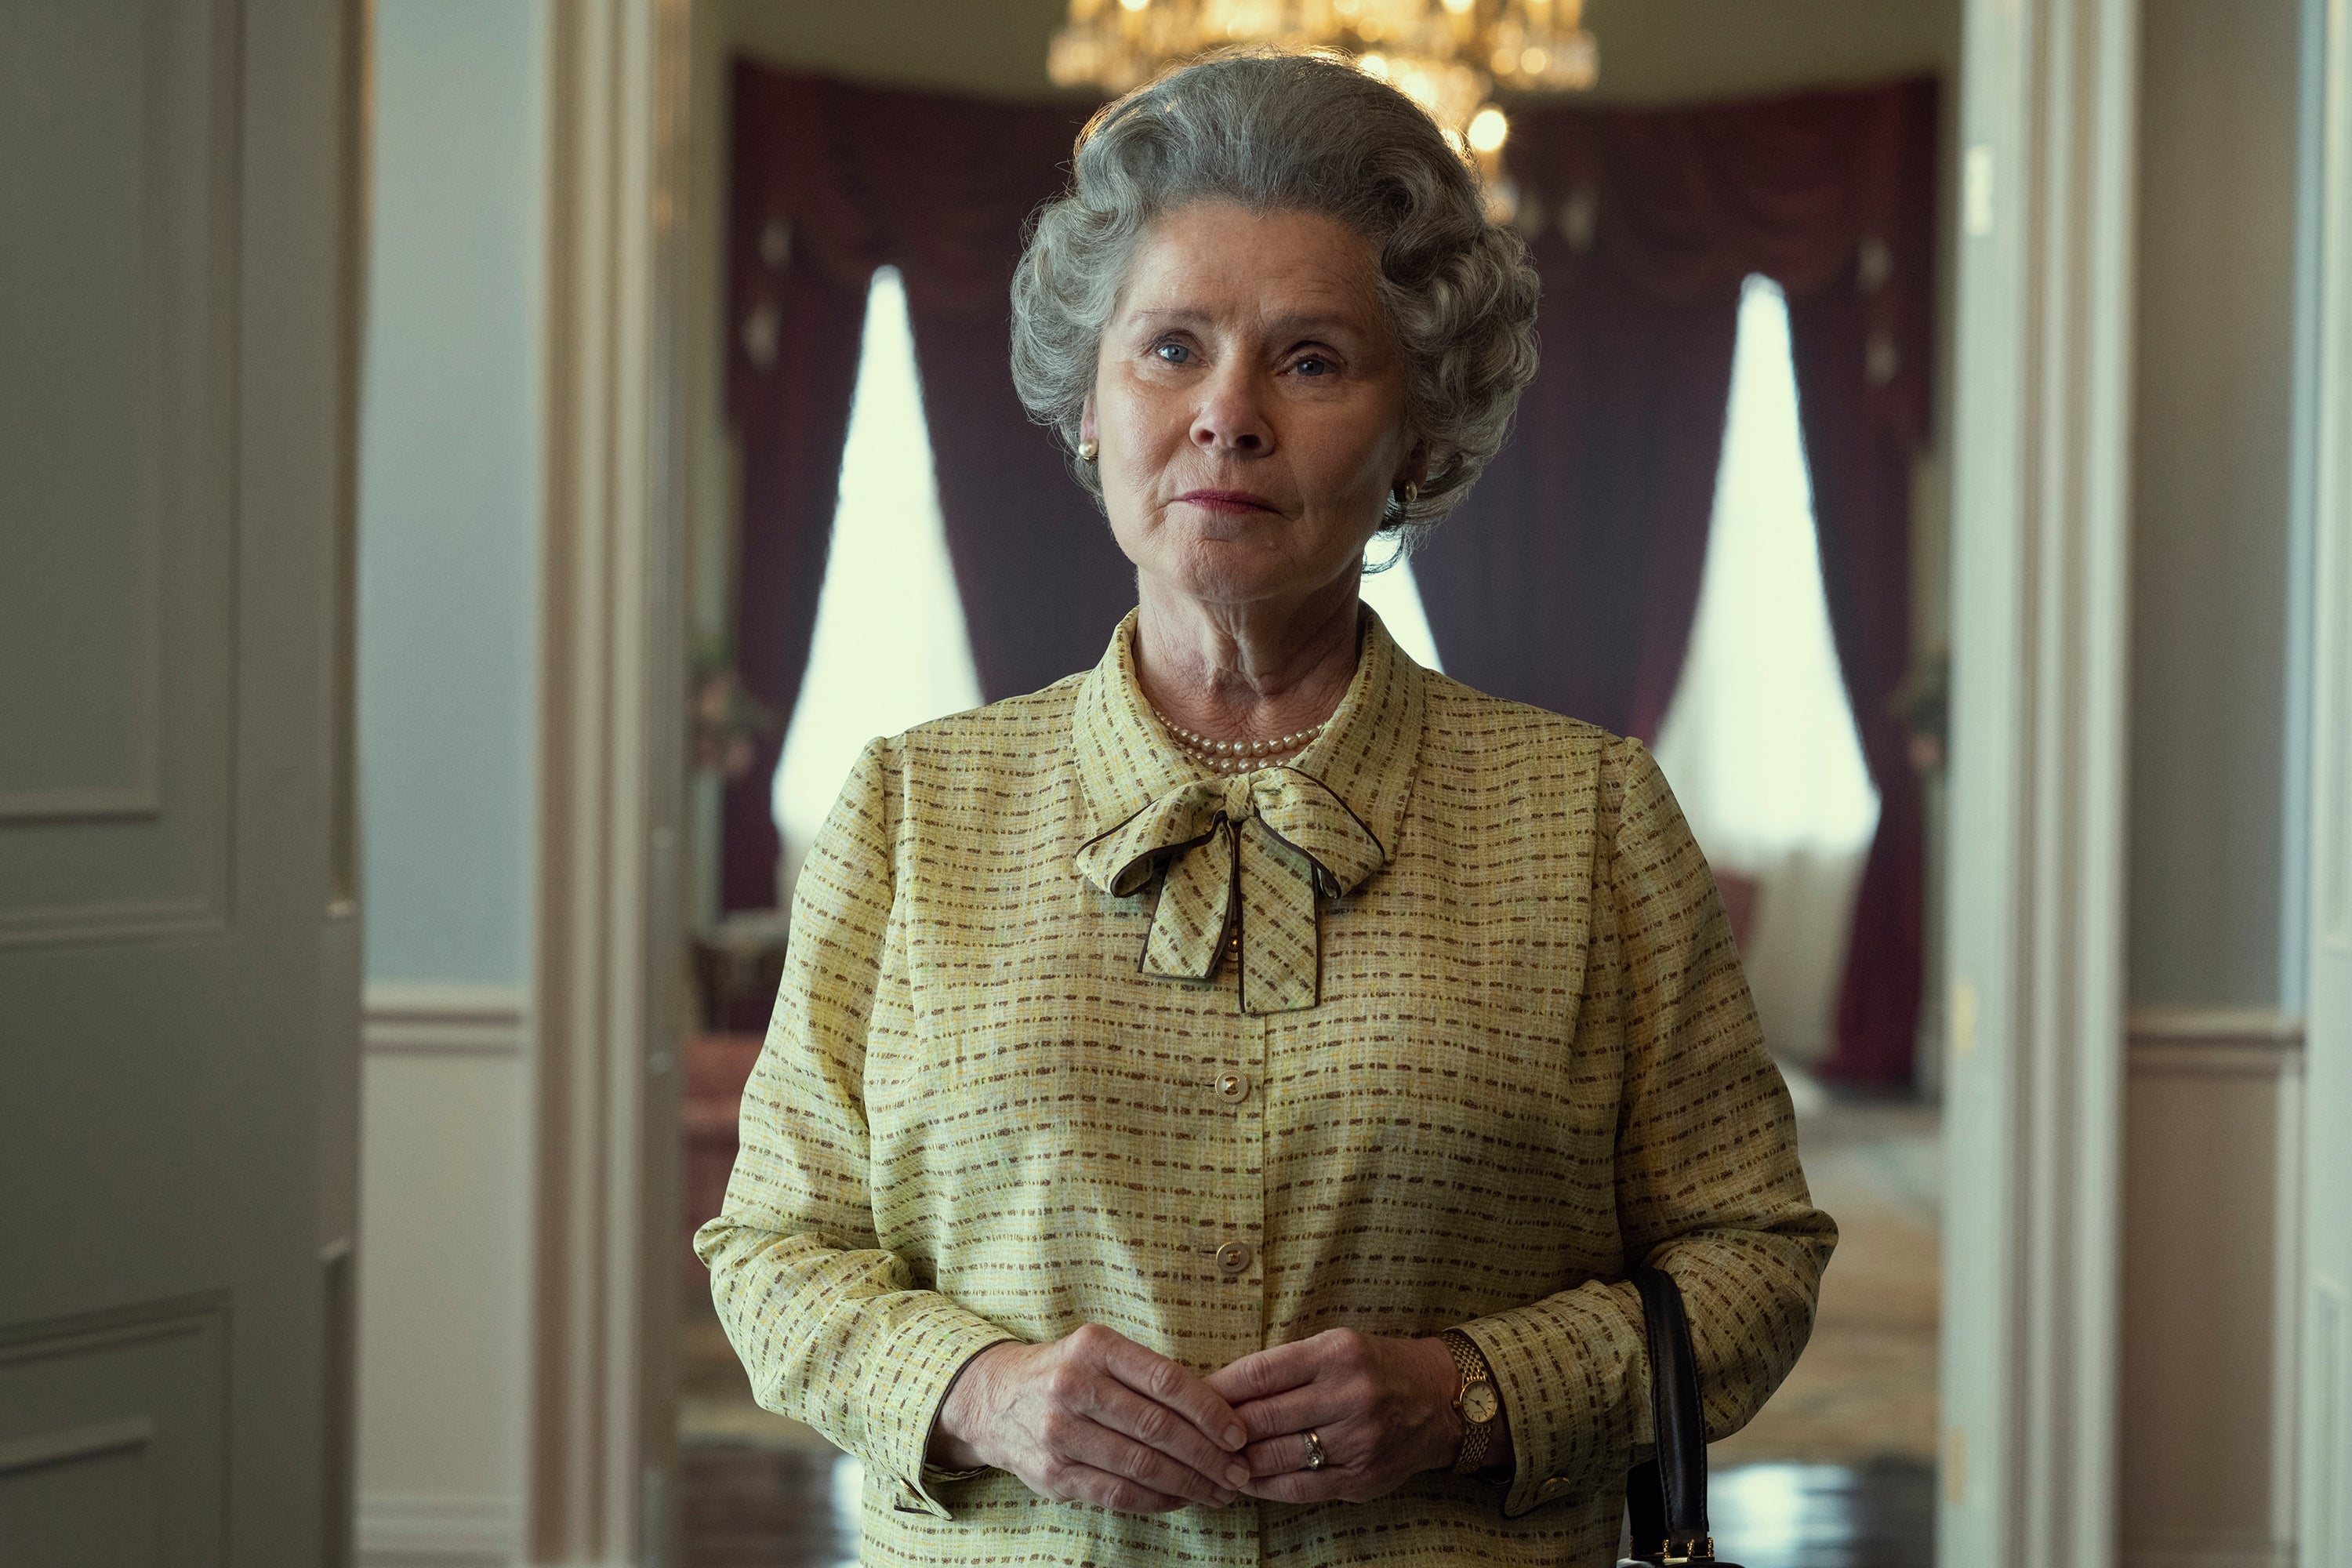 Staunton has played Queen Elizabeth II in ‘The Crown’ since the start of season five